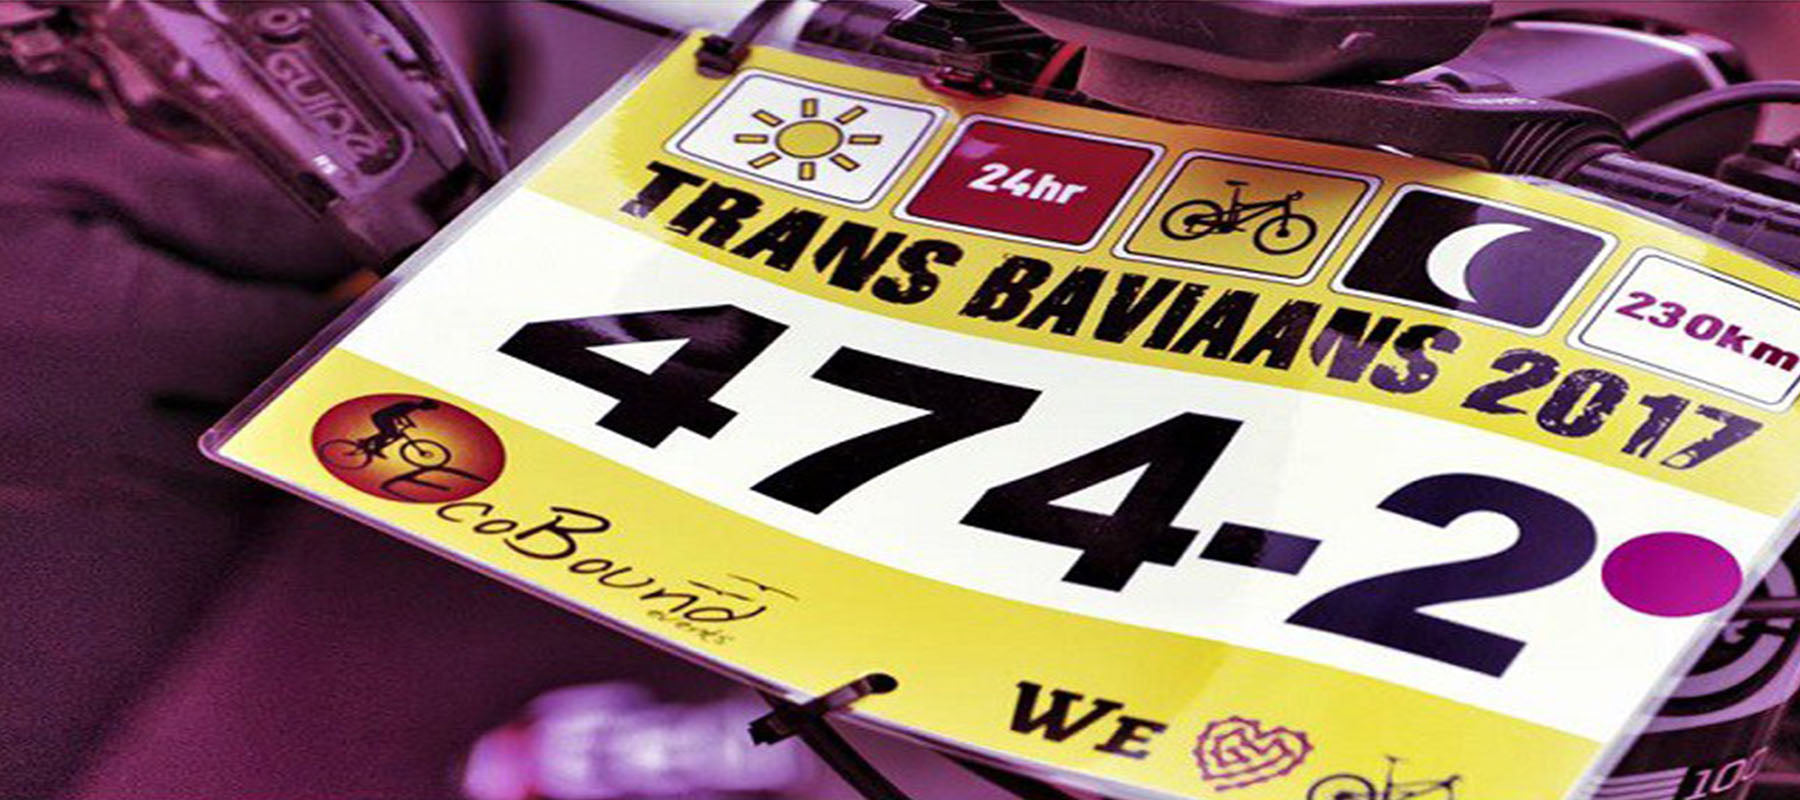 Race Tested: Transbaviaans 2017